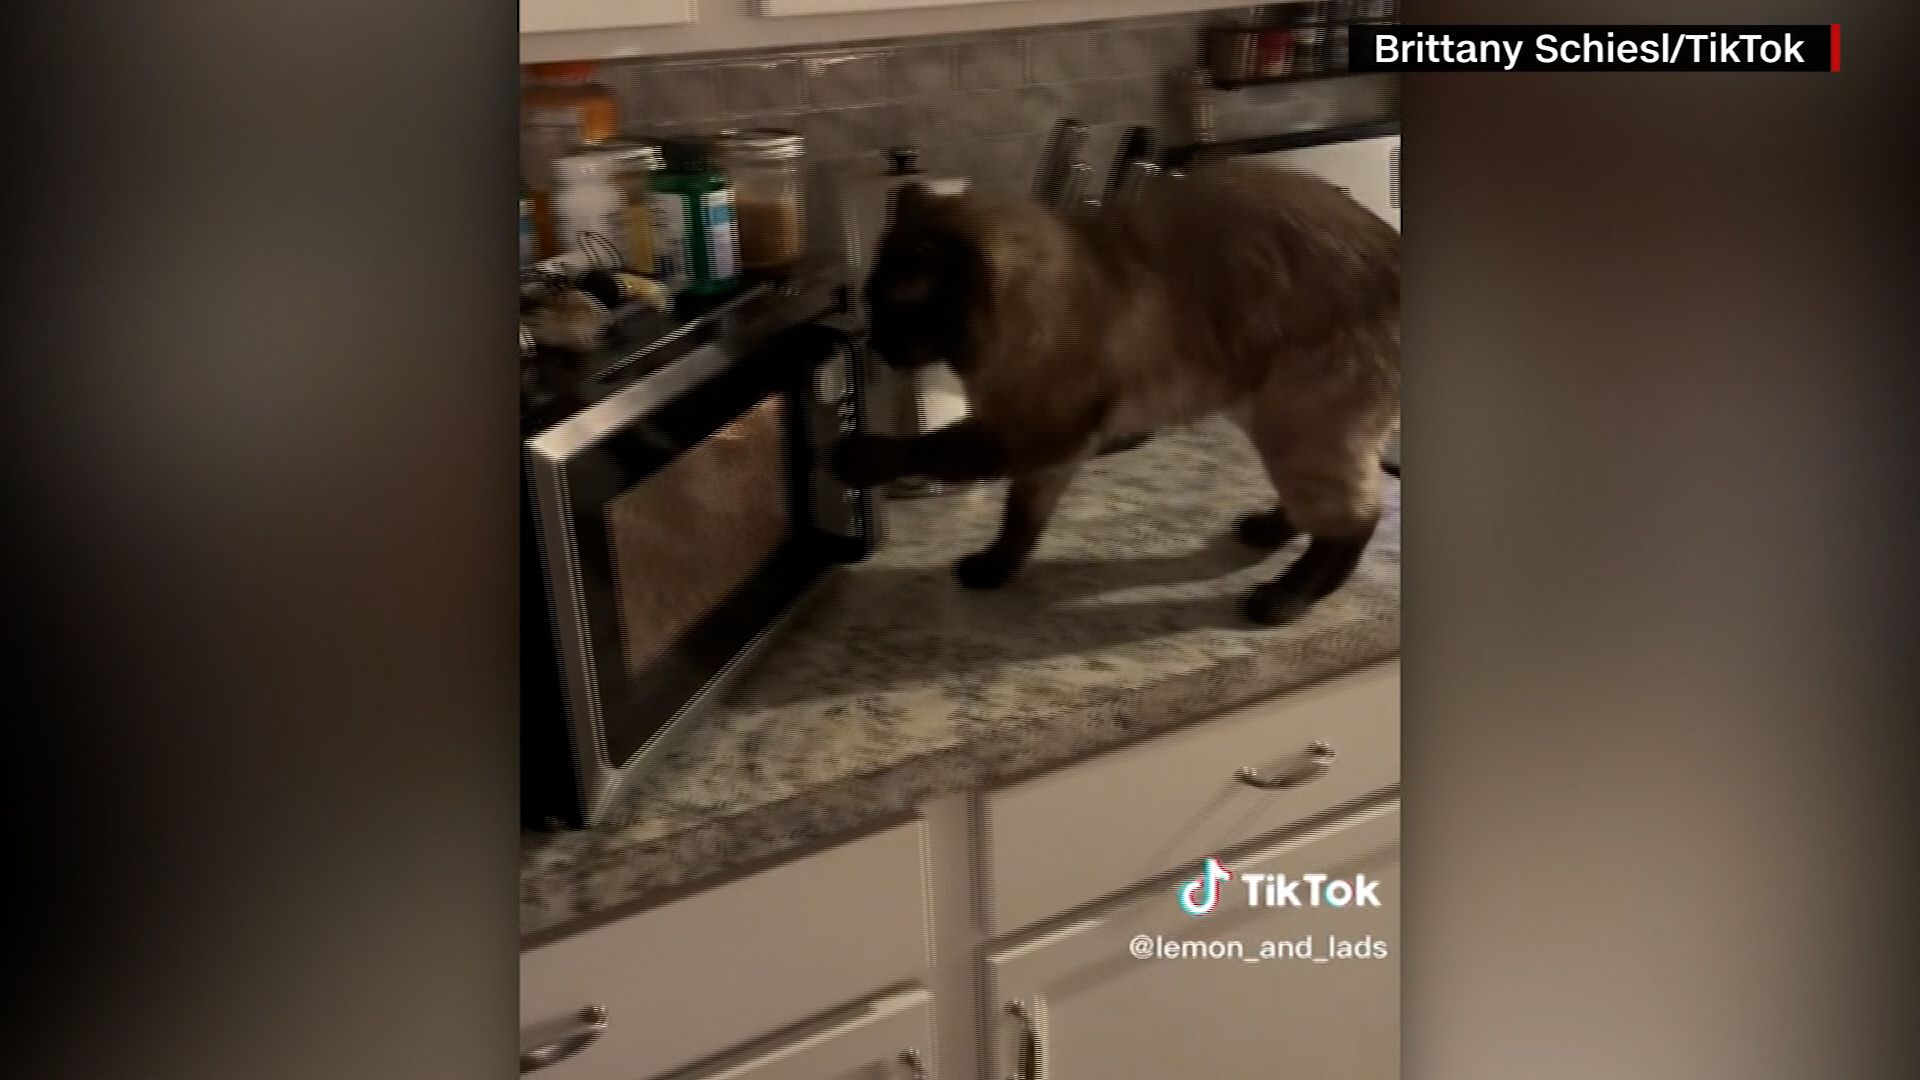 me putting my pet fork in microwave meme｜TikTok Search